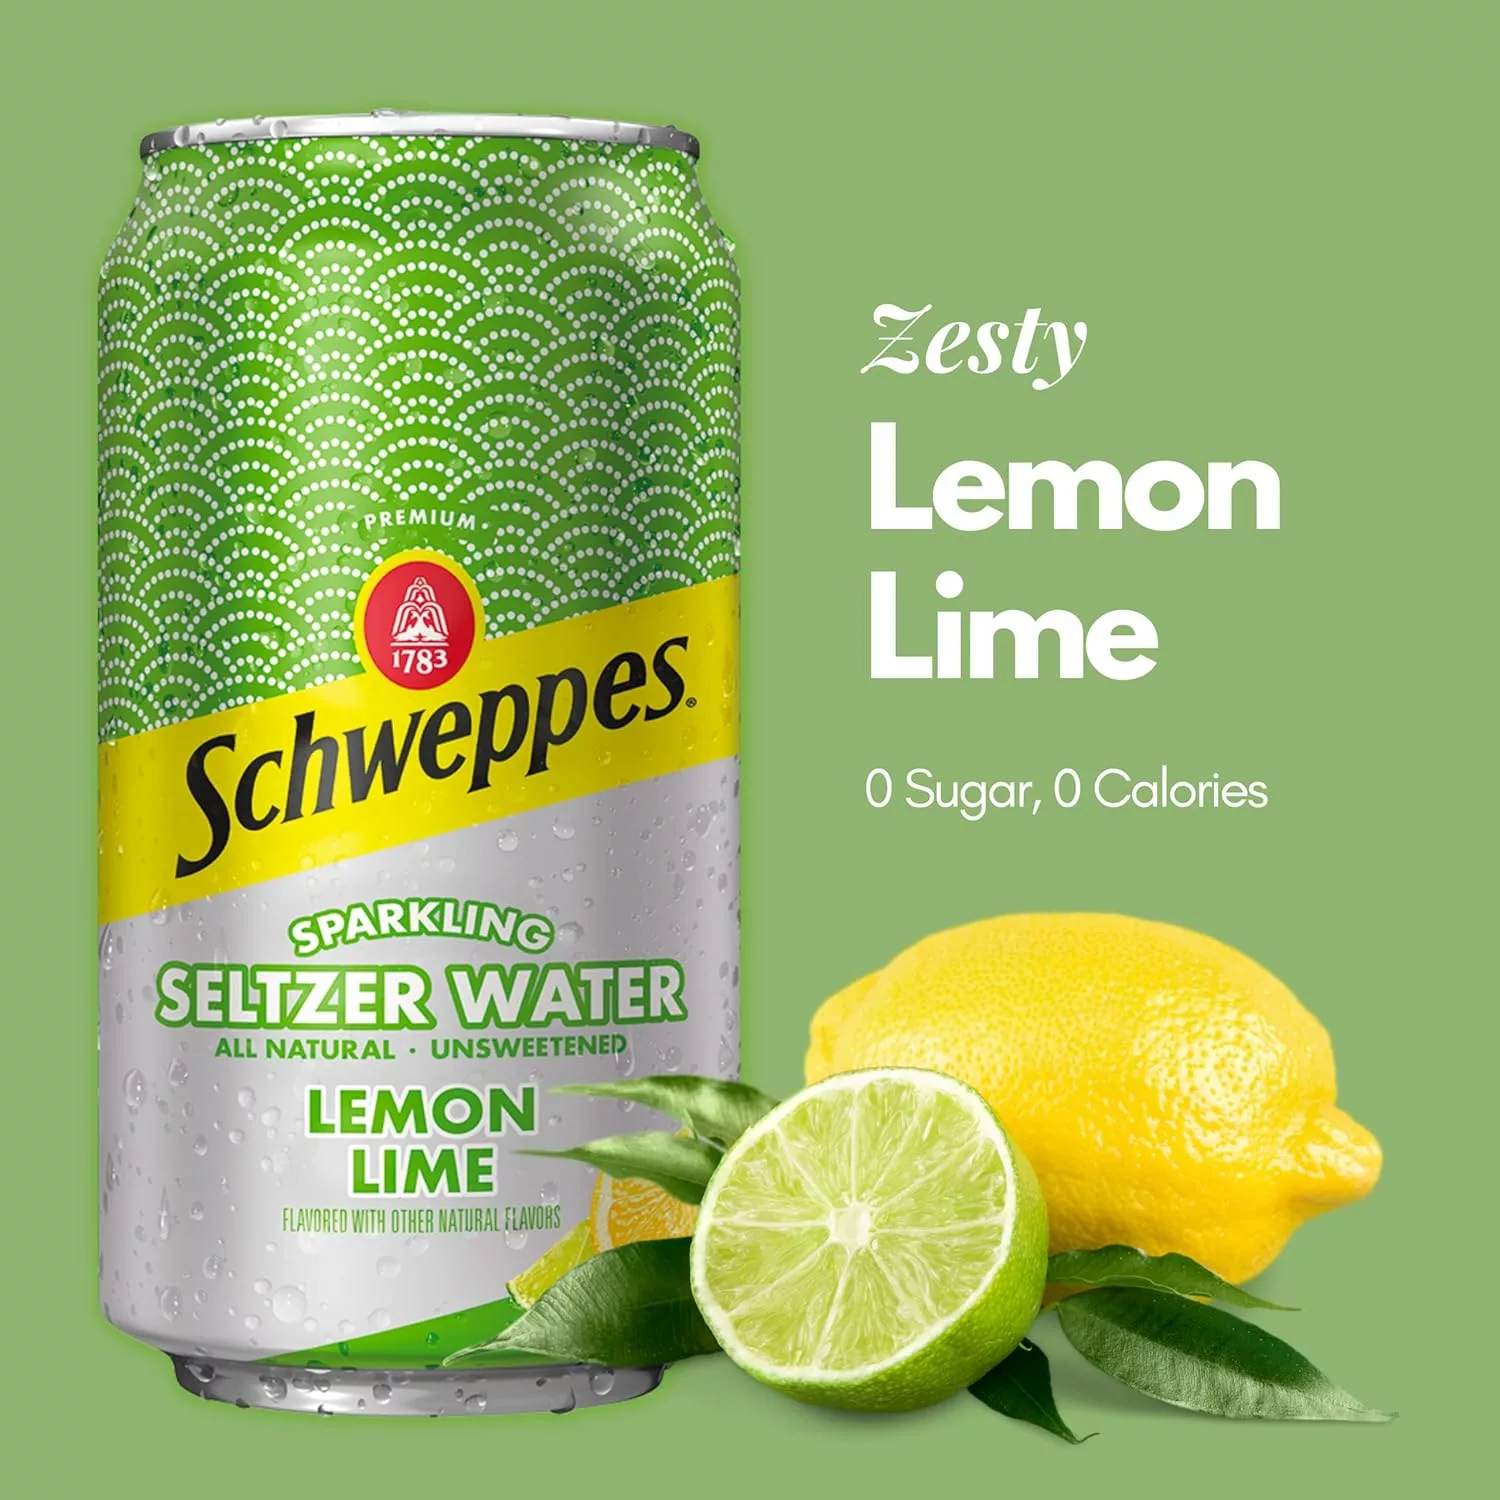 
Schweppes Lemon Lime Sparkling Seltzer Water